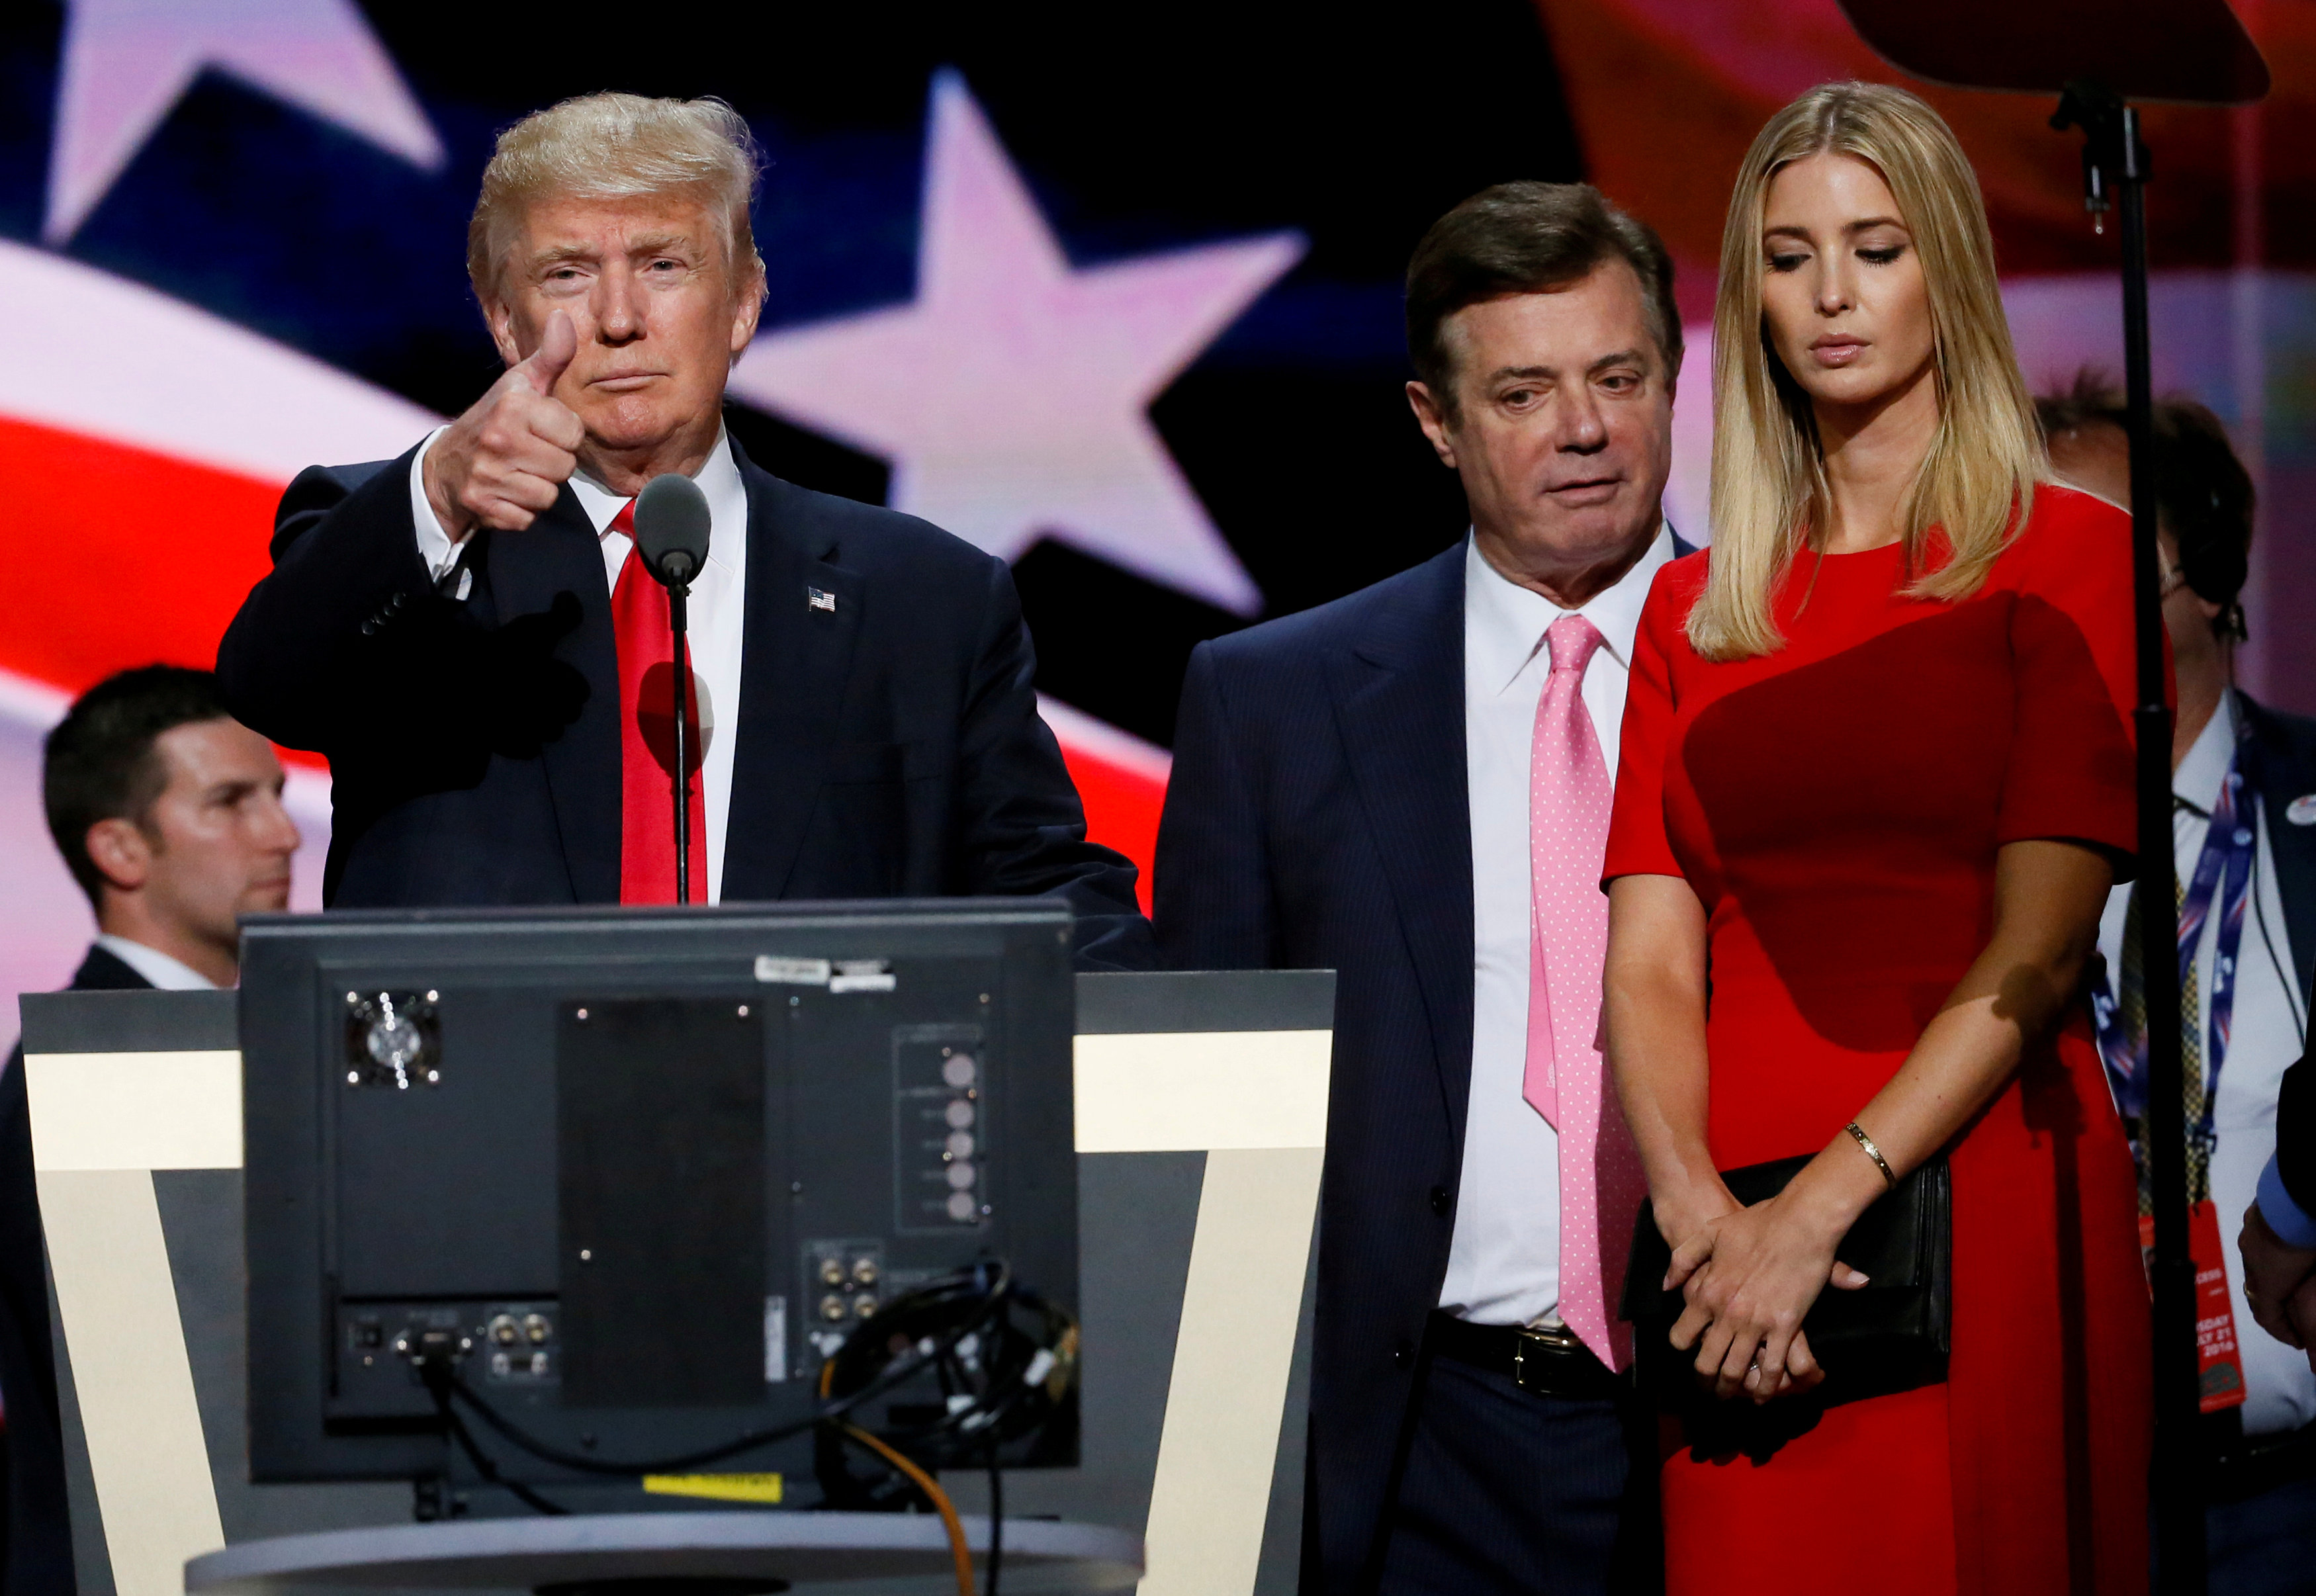 Paul Manafort junto a Donald Trump e Ivanka Trump en la Convención Nacional Republicana en Cleveland el 21 de julio de 2016 (REUTERS/Rick Wilking/File Photo)